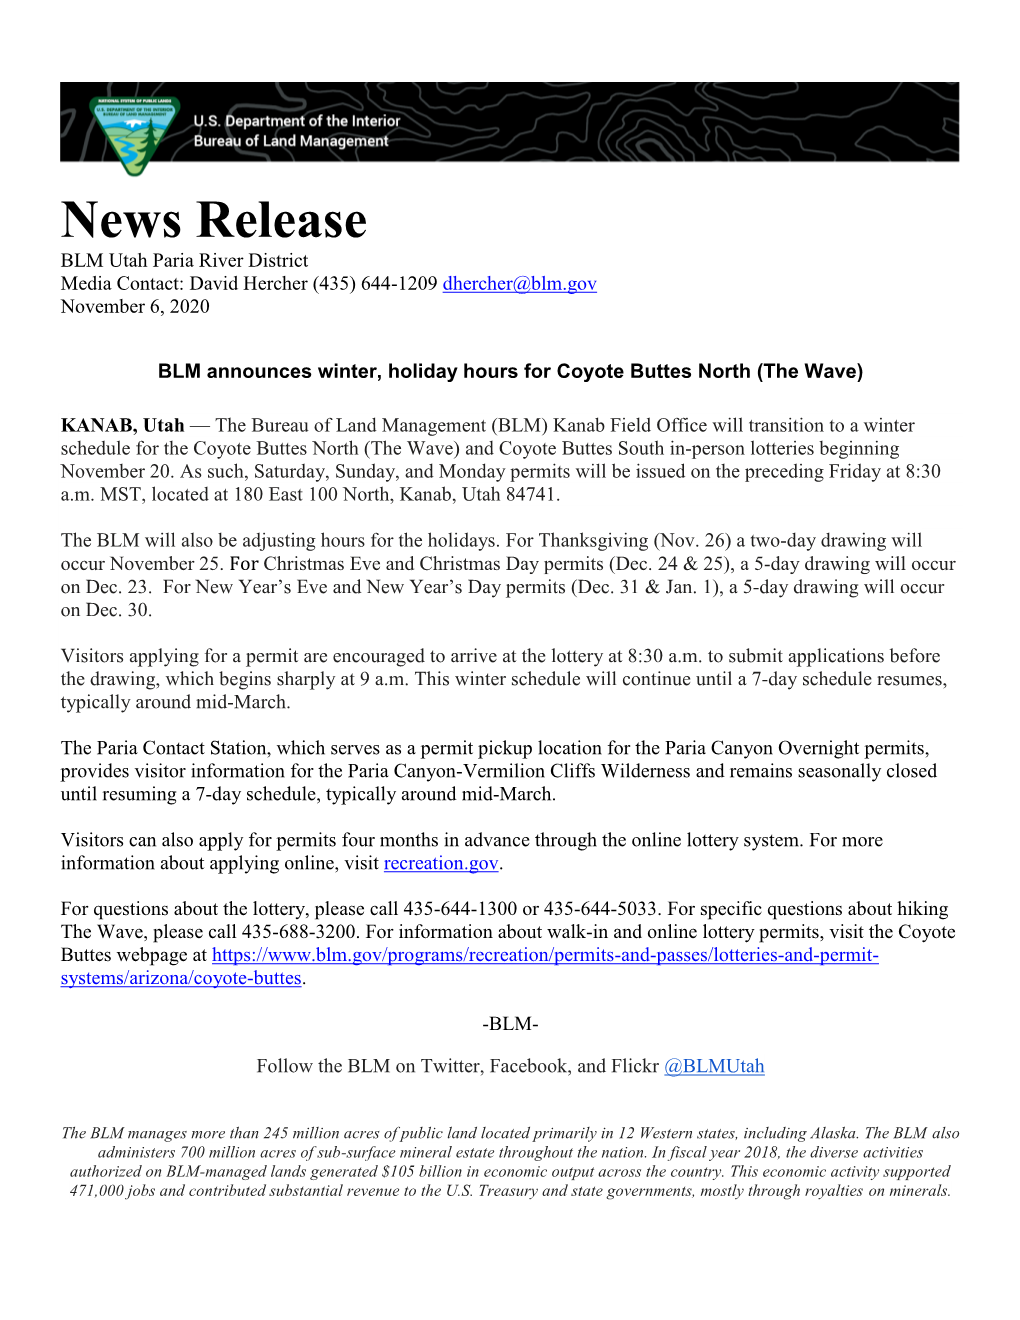 News Release BLM Utah Paria River District Media Contact: David Hercher (435) 644-1209 Dhercher@Blm.Gov November 6, 2020